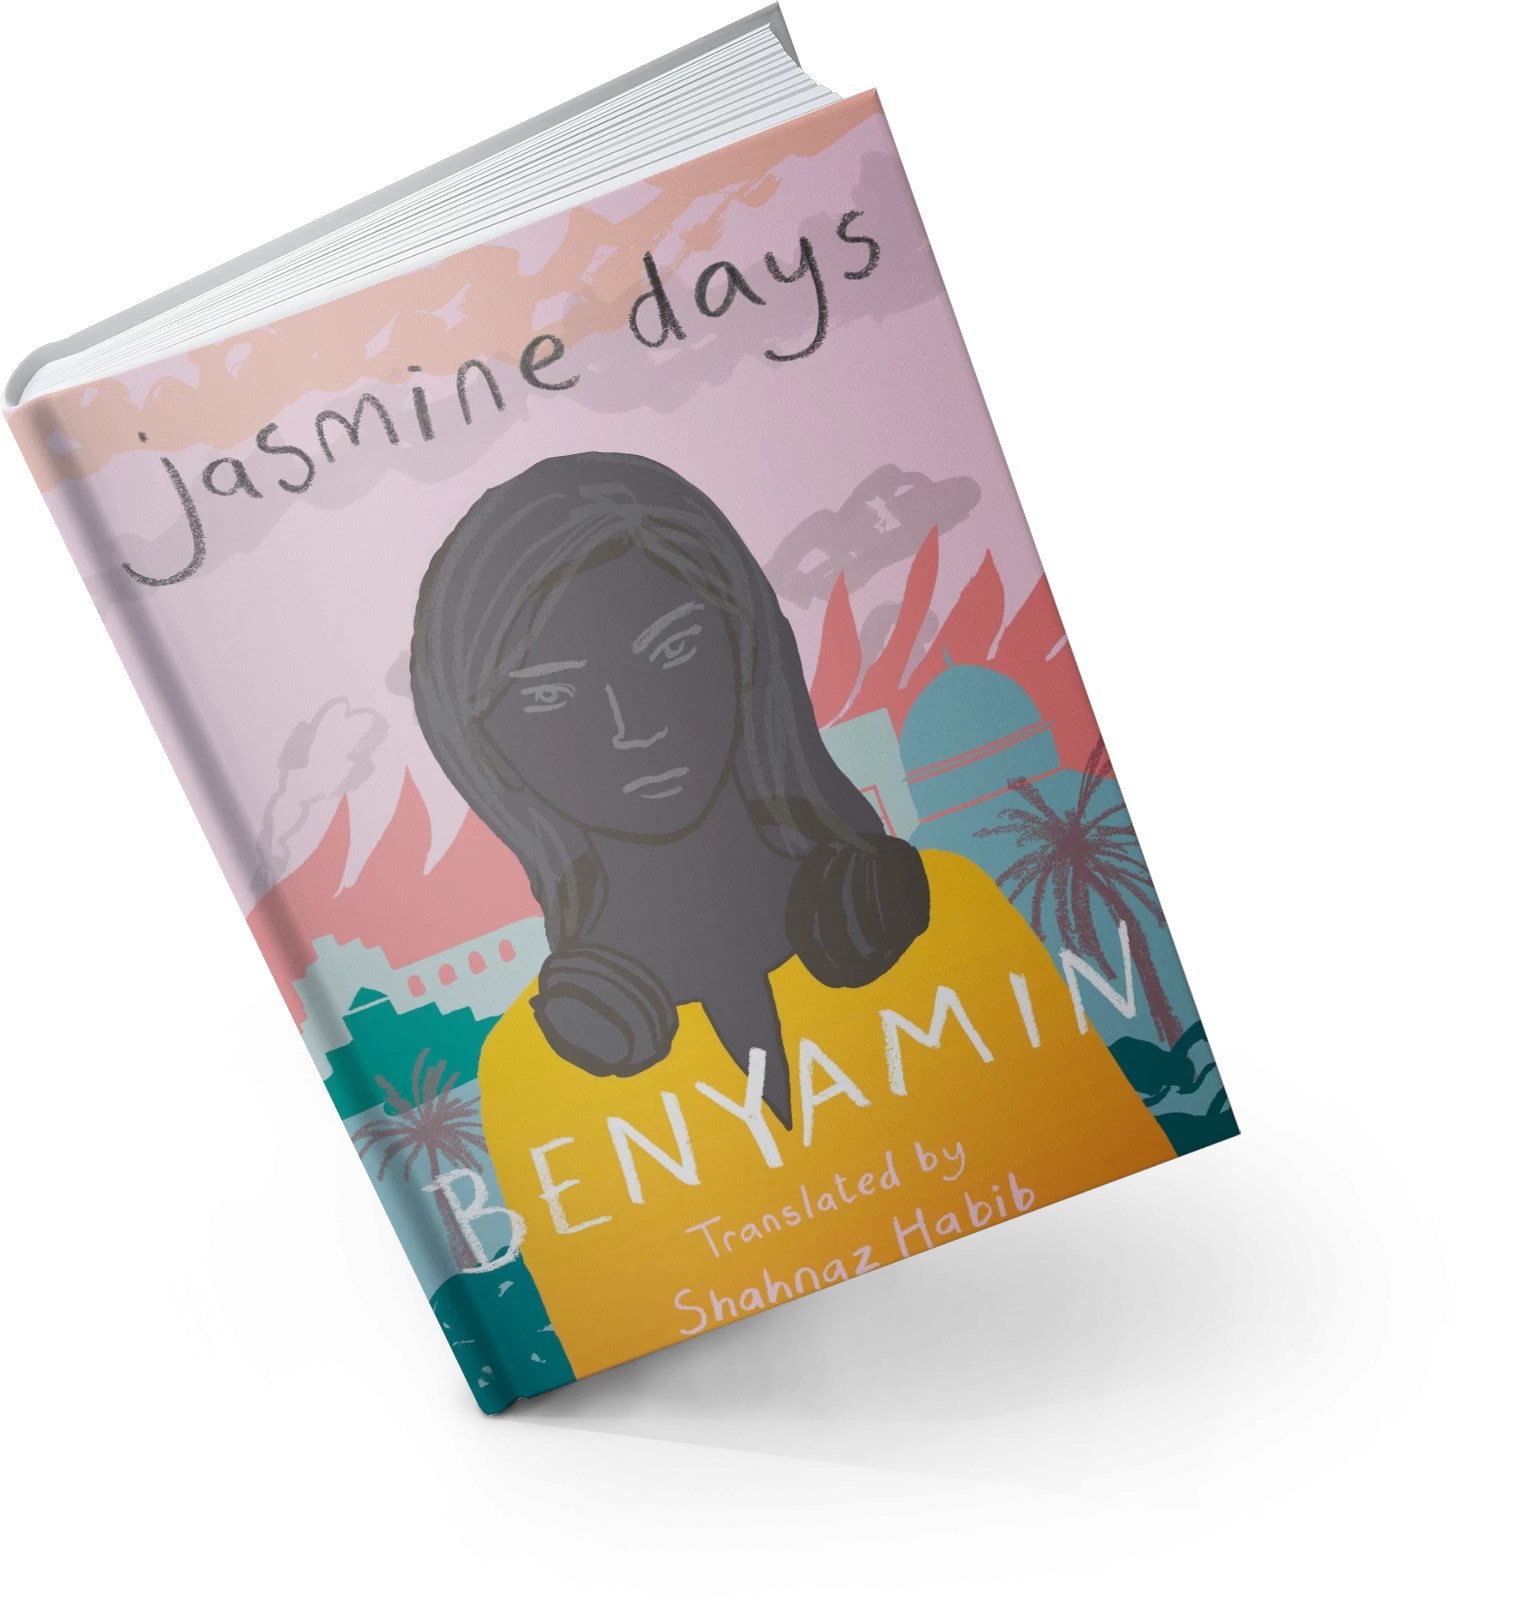 Jasmine Days